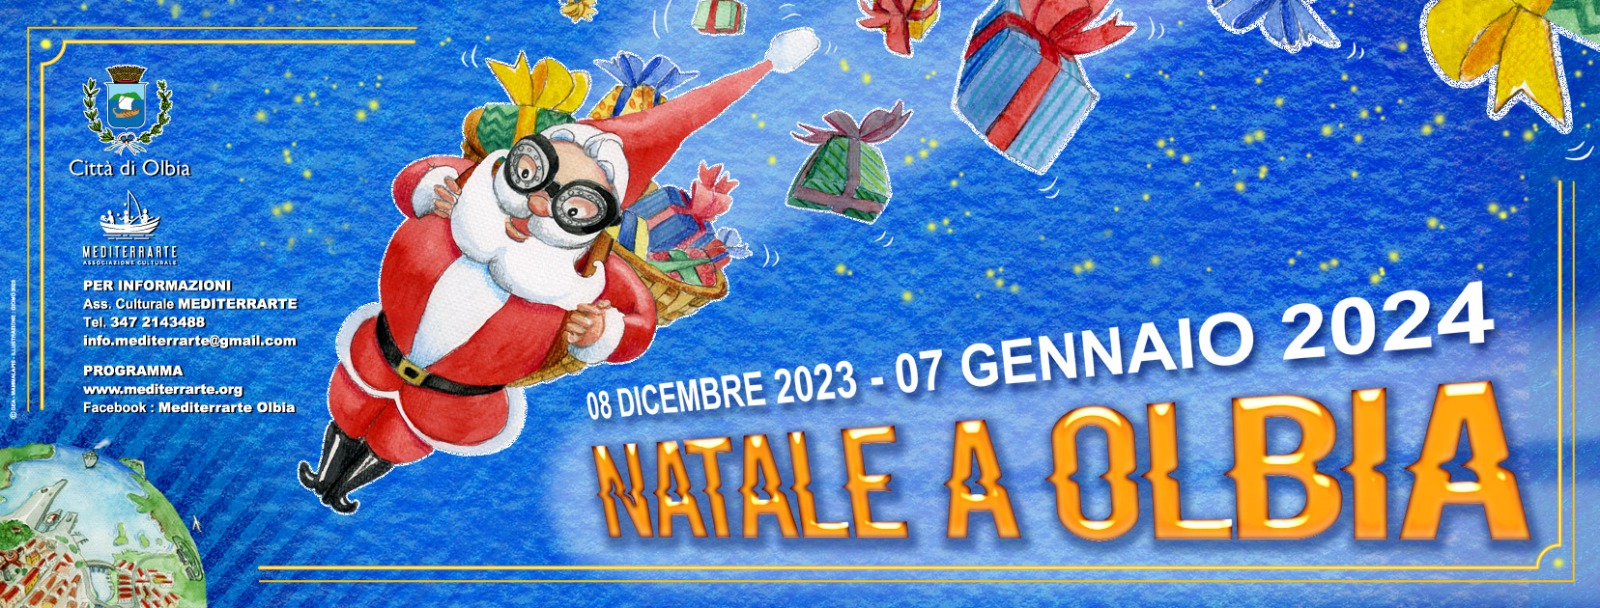 Eventi di Natale 2023